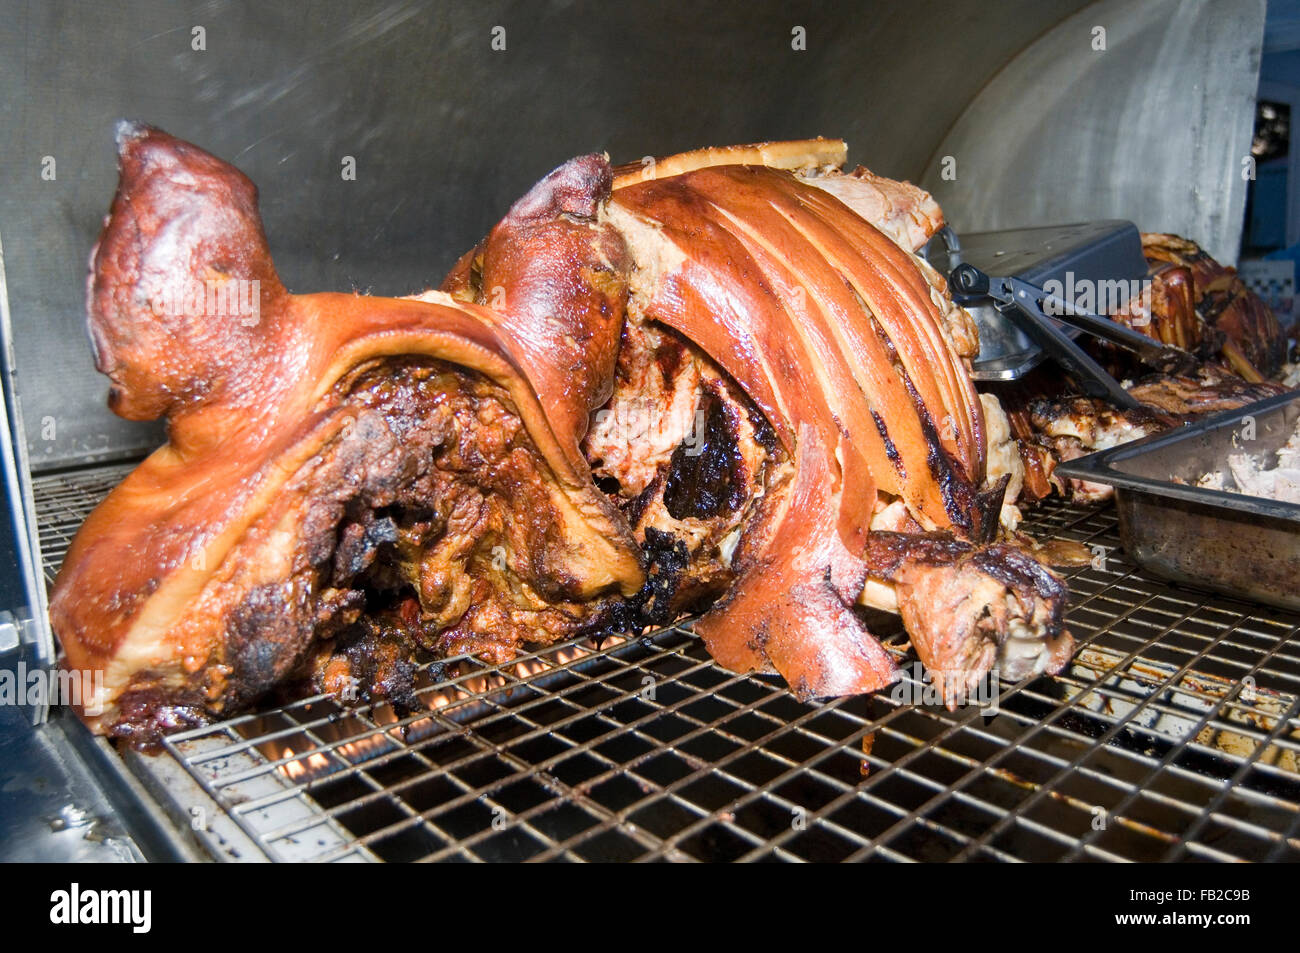 hog roast roasts meat pork pig head roasted meats head carcass open flame flames roast roasting well cooked red hogroast hogroas Stock Photo